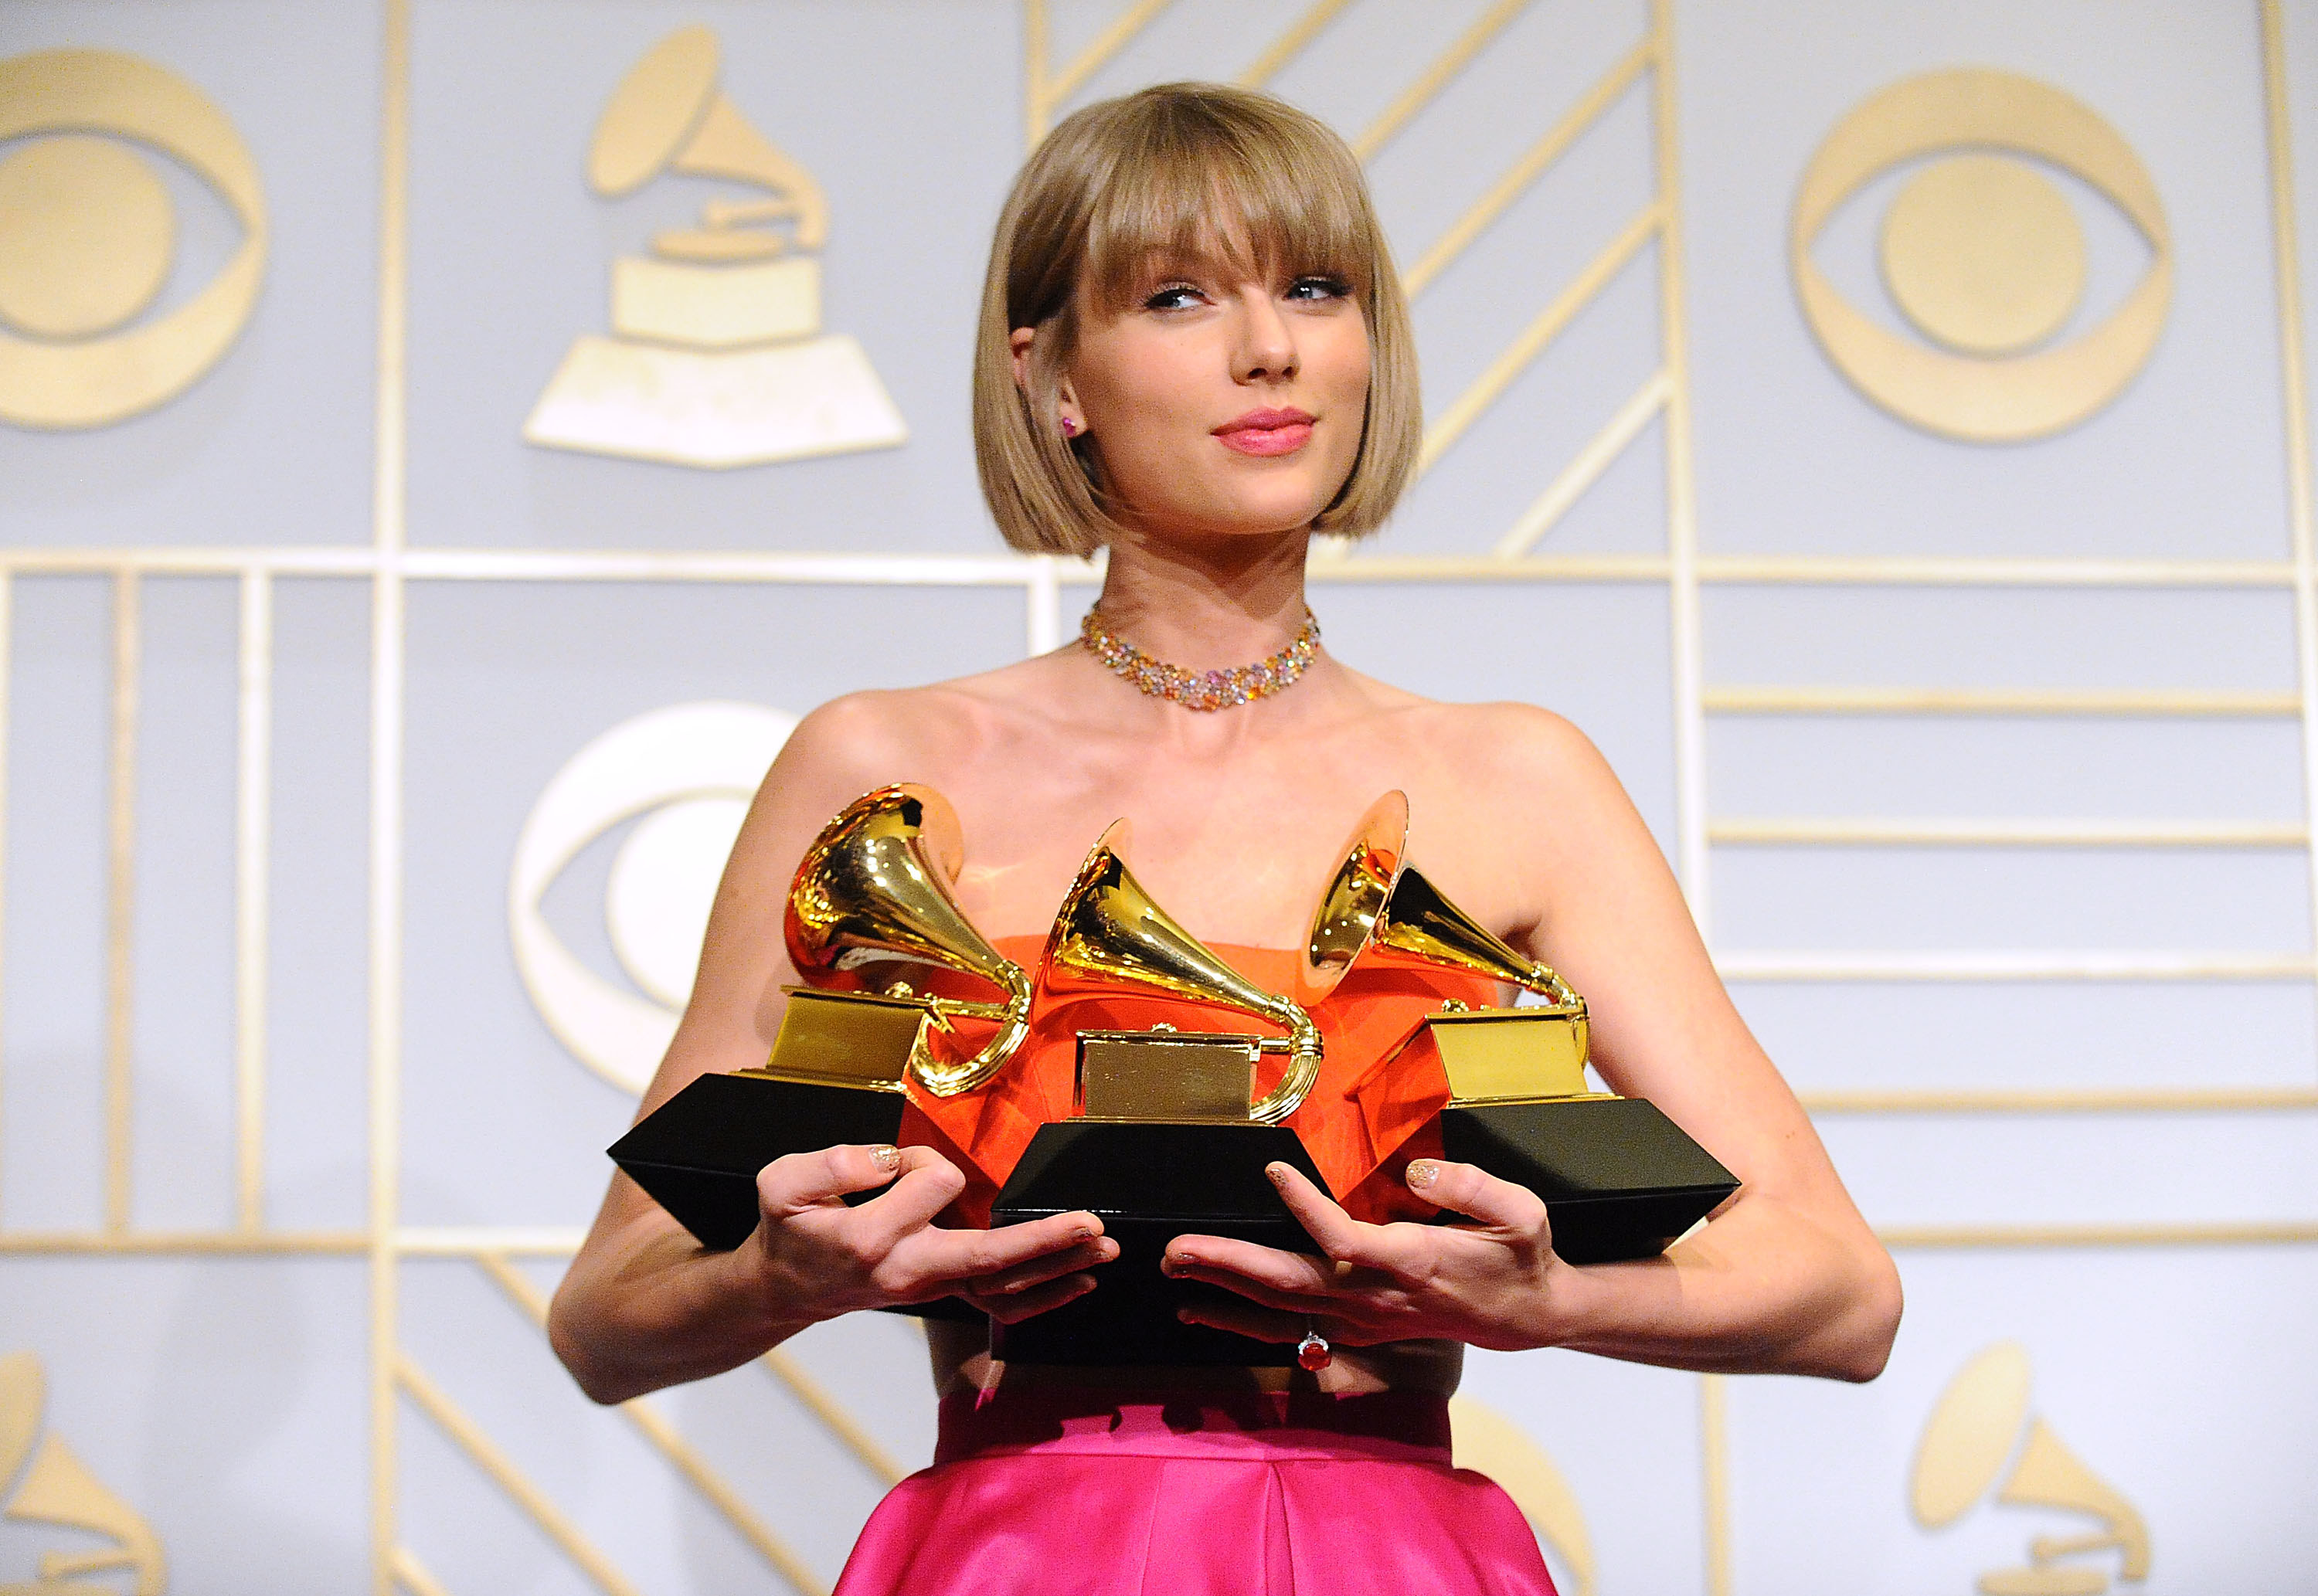 Taylor holding three Grammys